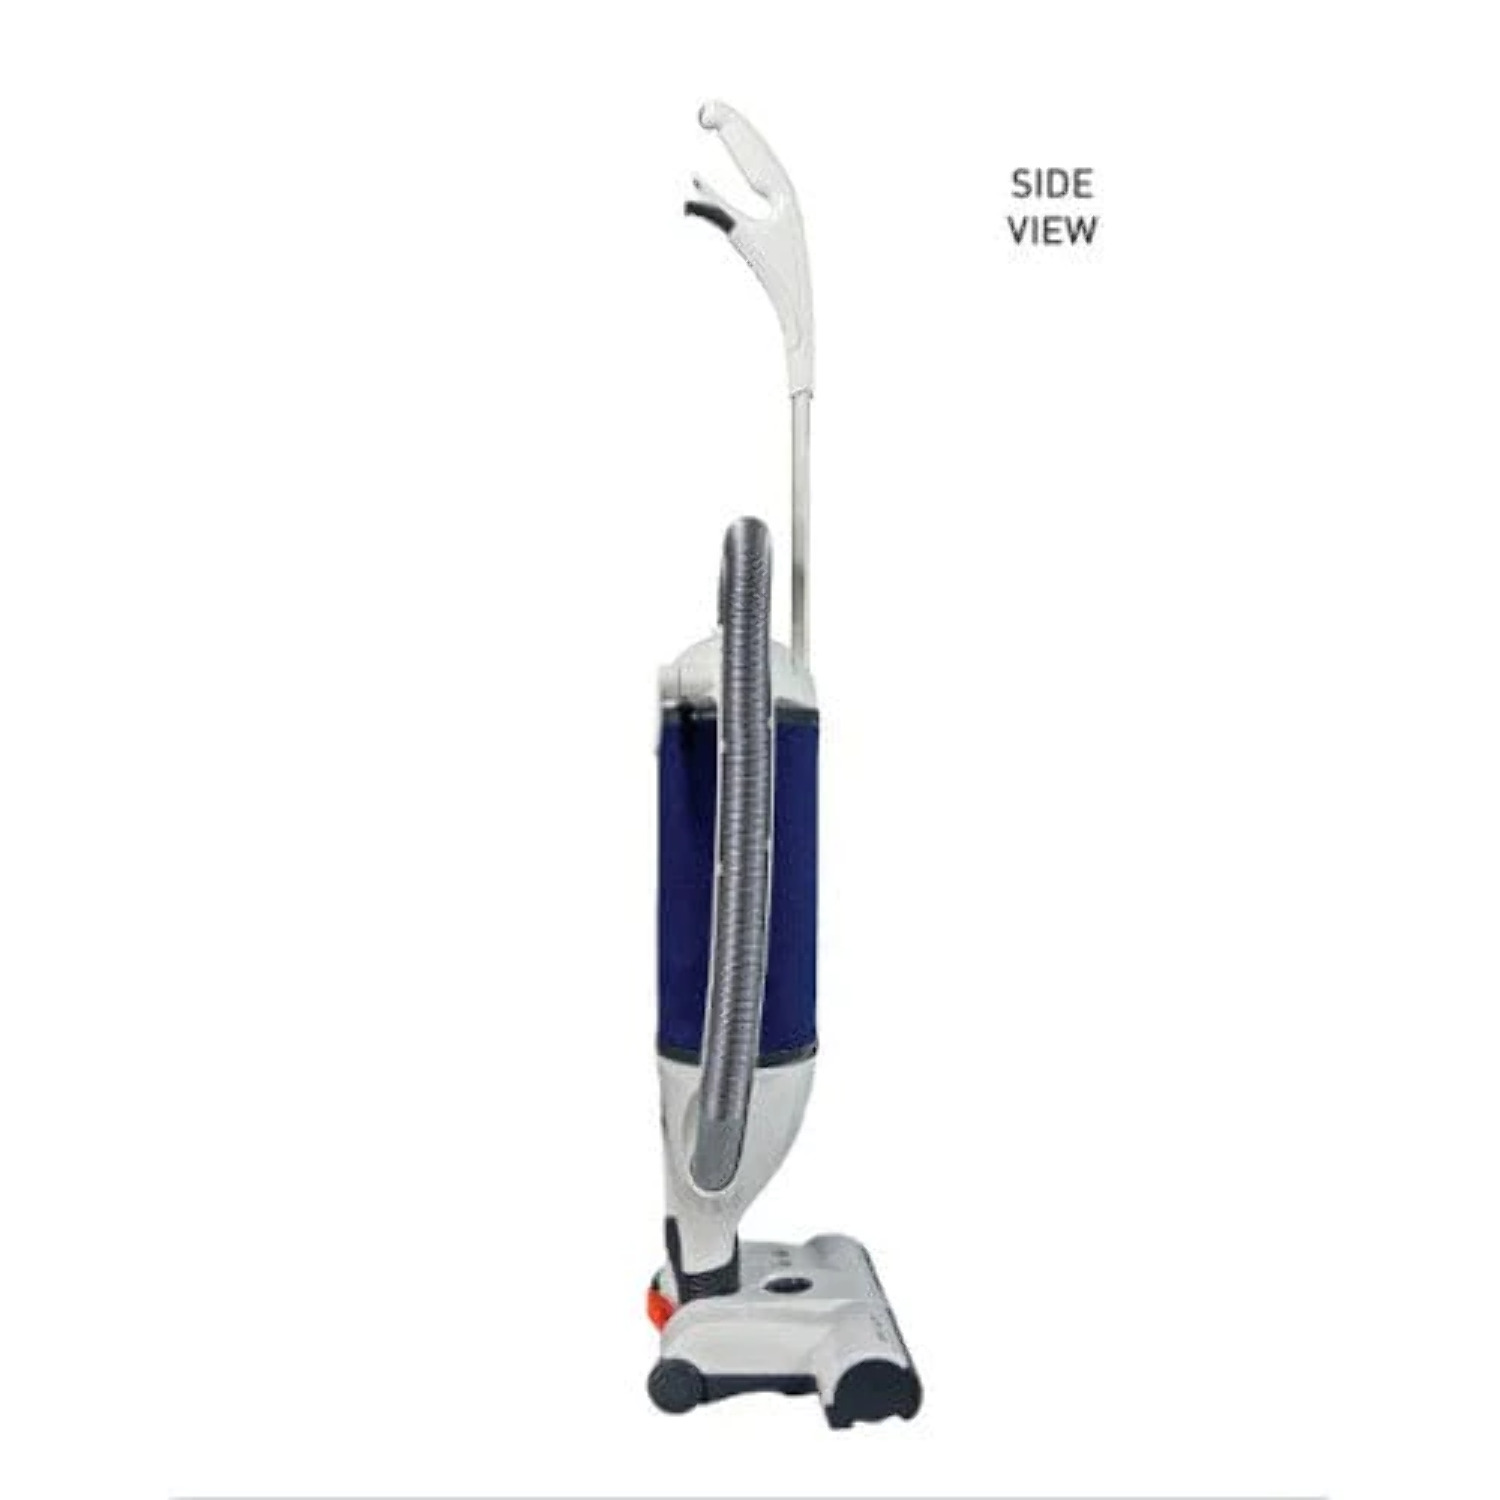 Sebo 9855AM Dart Upright Vacuum (Arctic White/Dark Blue) - image 4 of 10